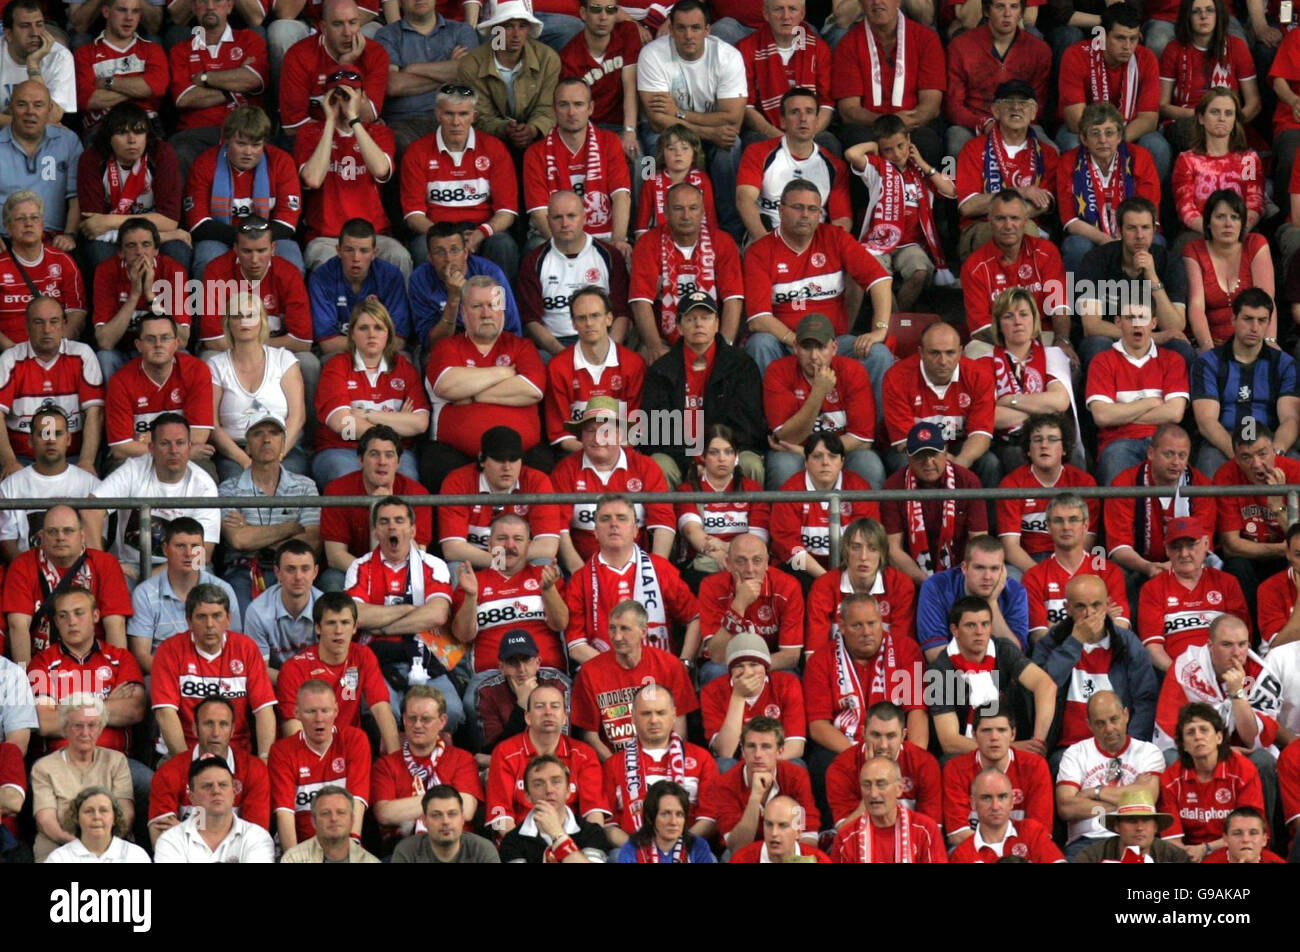 SOCCER Middlesbrough. Middlesbrough fans during the UEFA Cup Final against Savilla at PSV Stadion, Eindhoven, Netherlands. Stock Photo